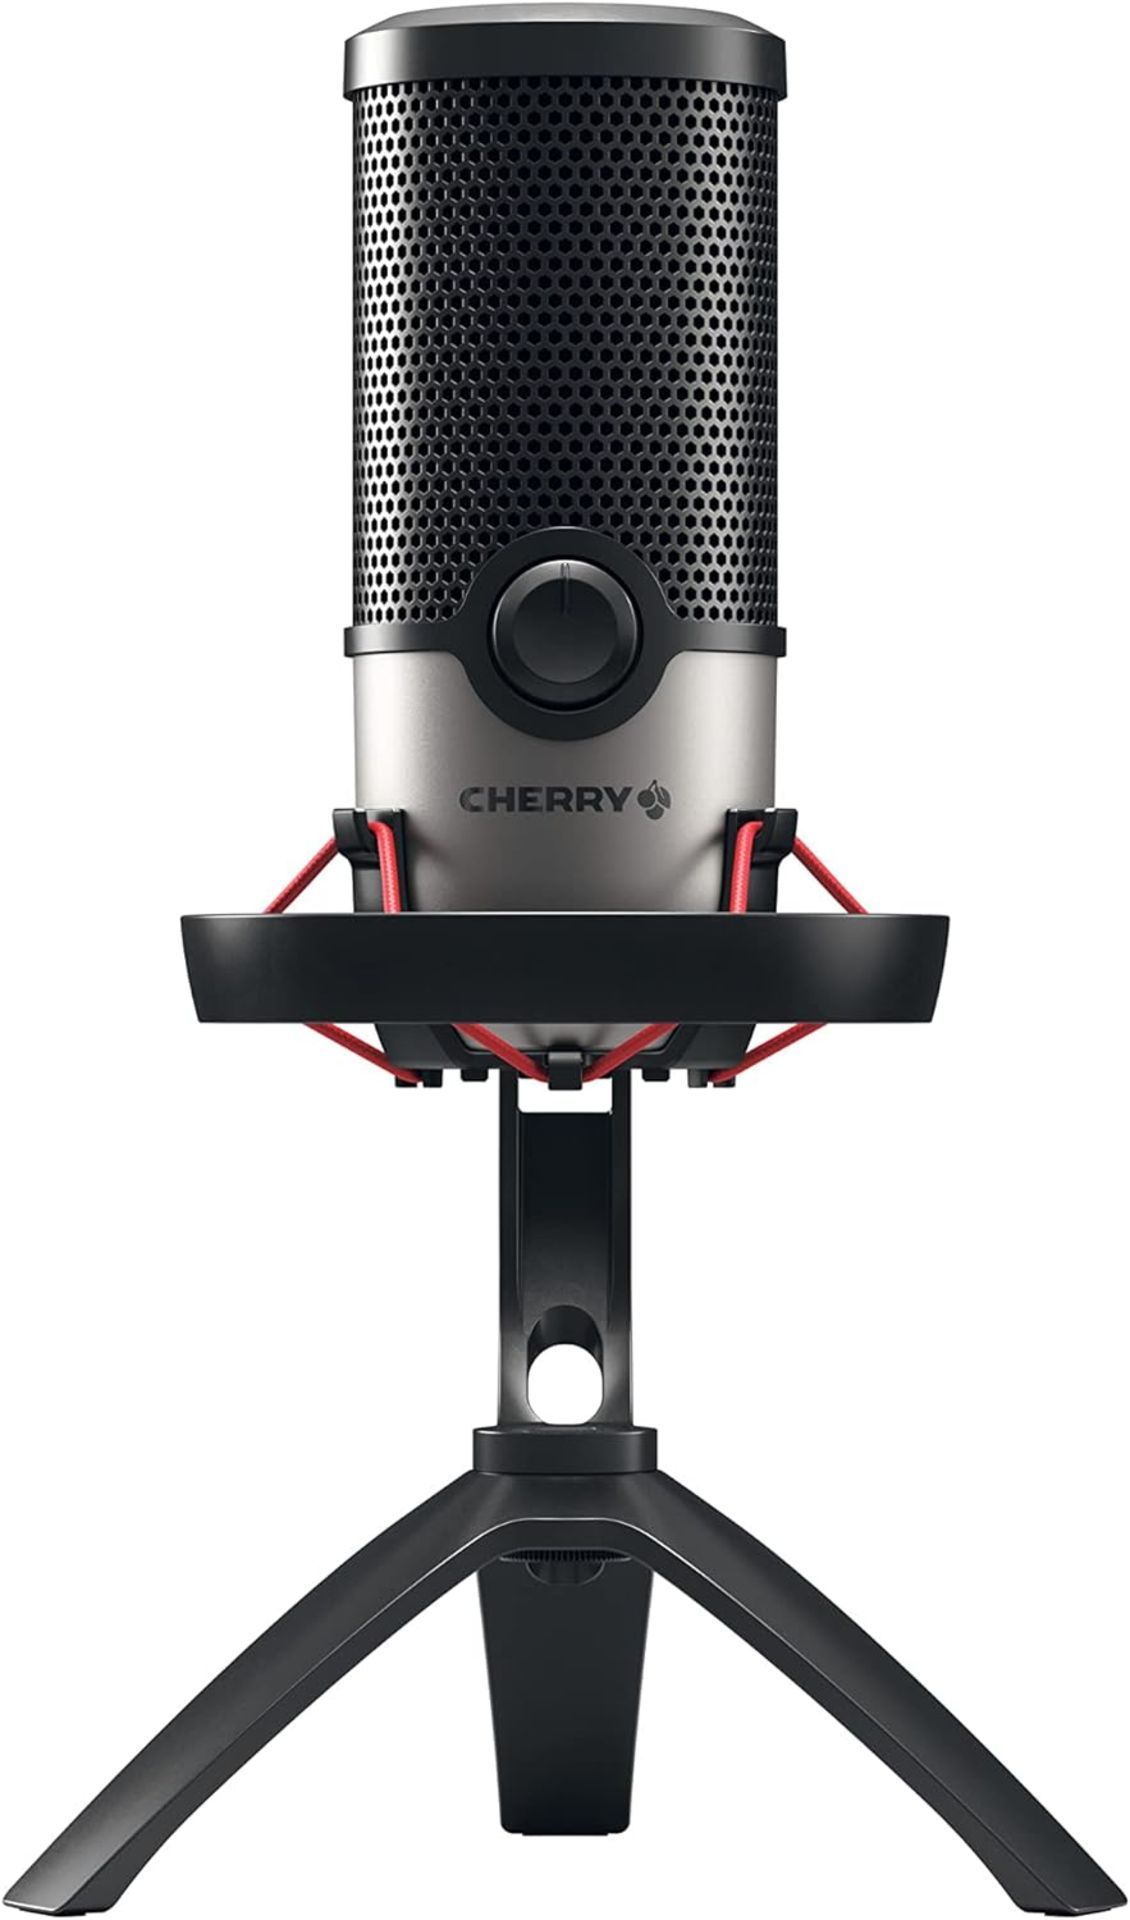 NEW & BOXED CHERRY UM 6.0 Advanced USB Microphone. RRP £89.99. Stylish desktop microphone with USB-C